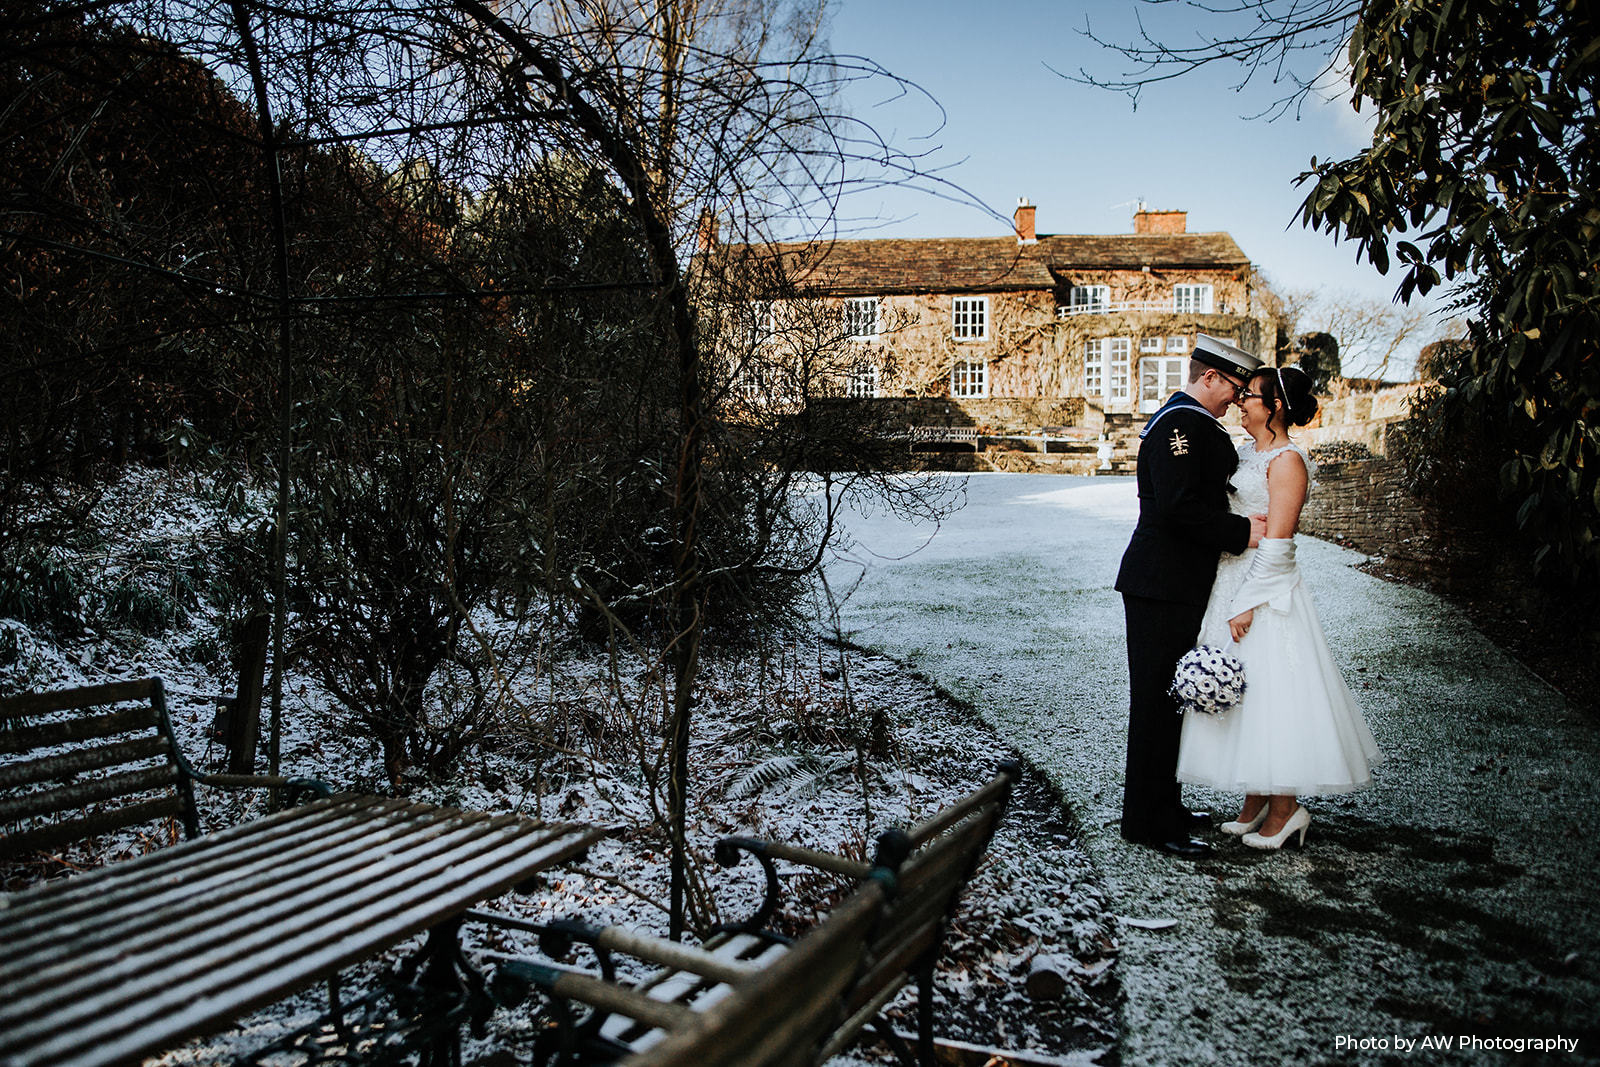 Danielle & Dan’s Winter Wonderland Wedding at Hilltop Country House